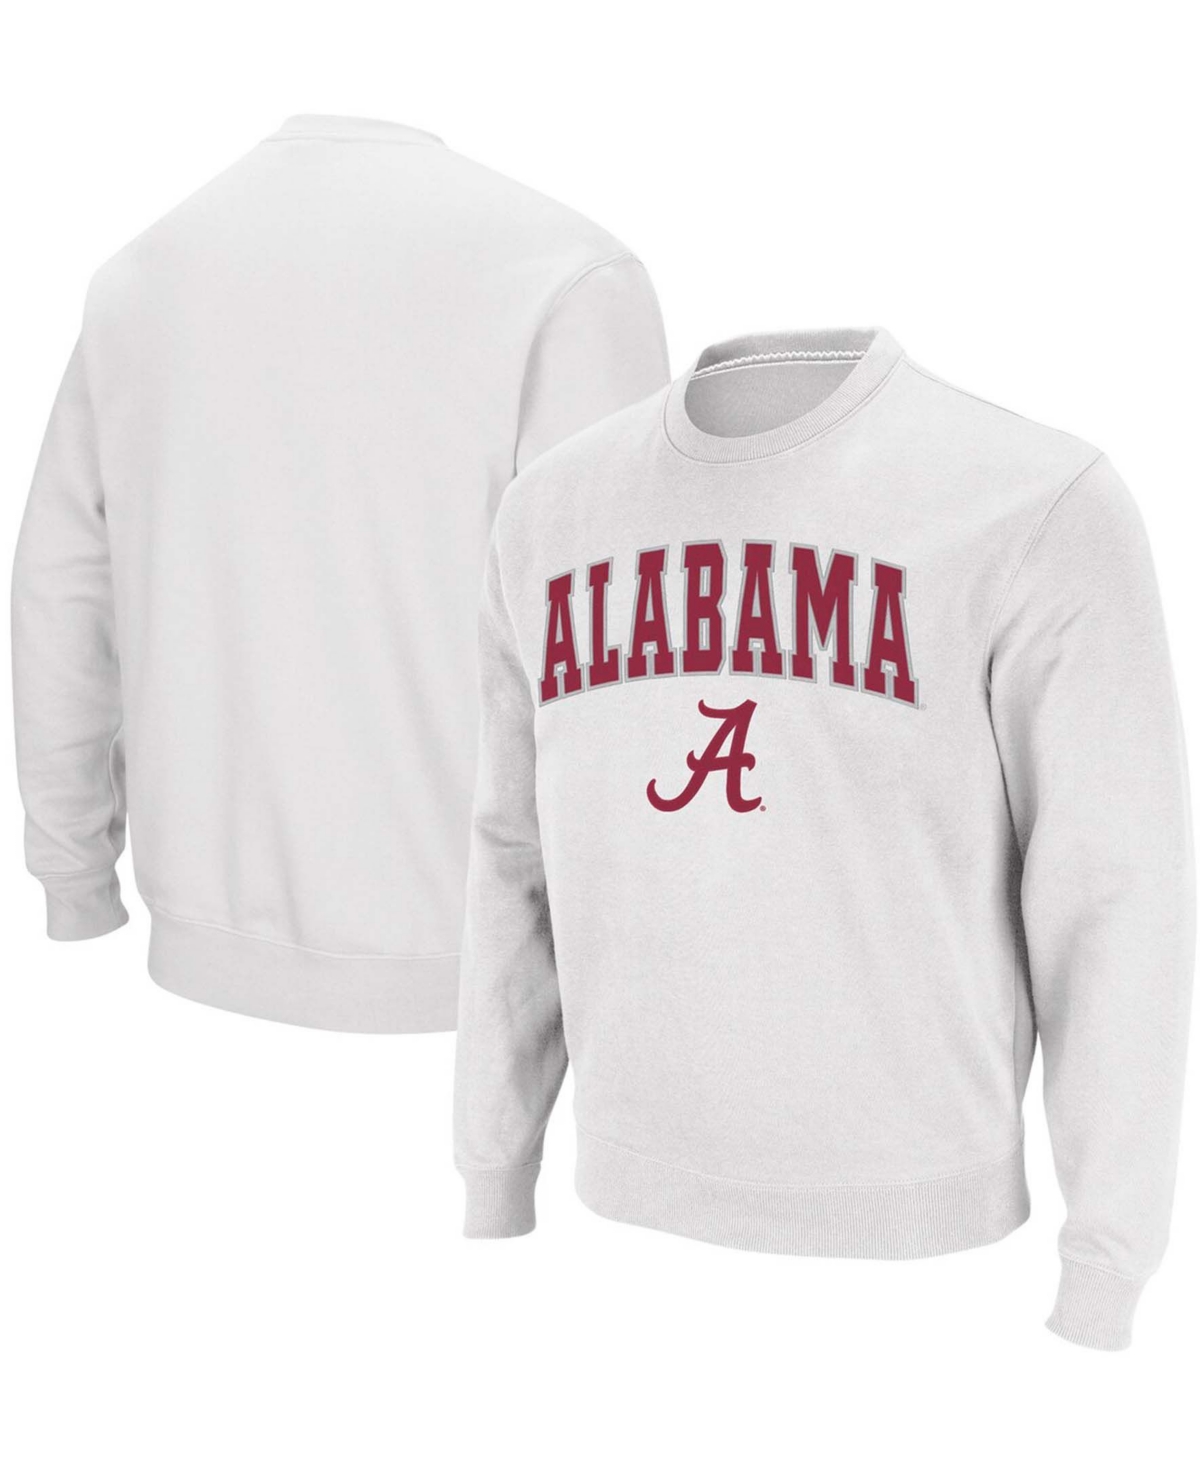 Shop Colosseum Men's White Alabama Crimson Tide Arch Logo Crew Neck Sweatshirt